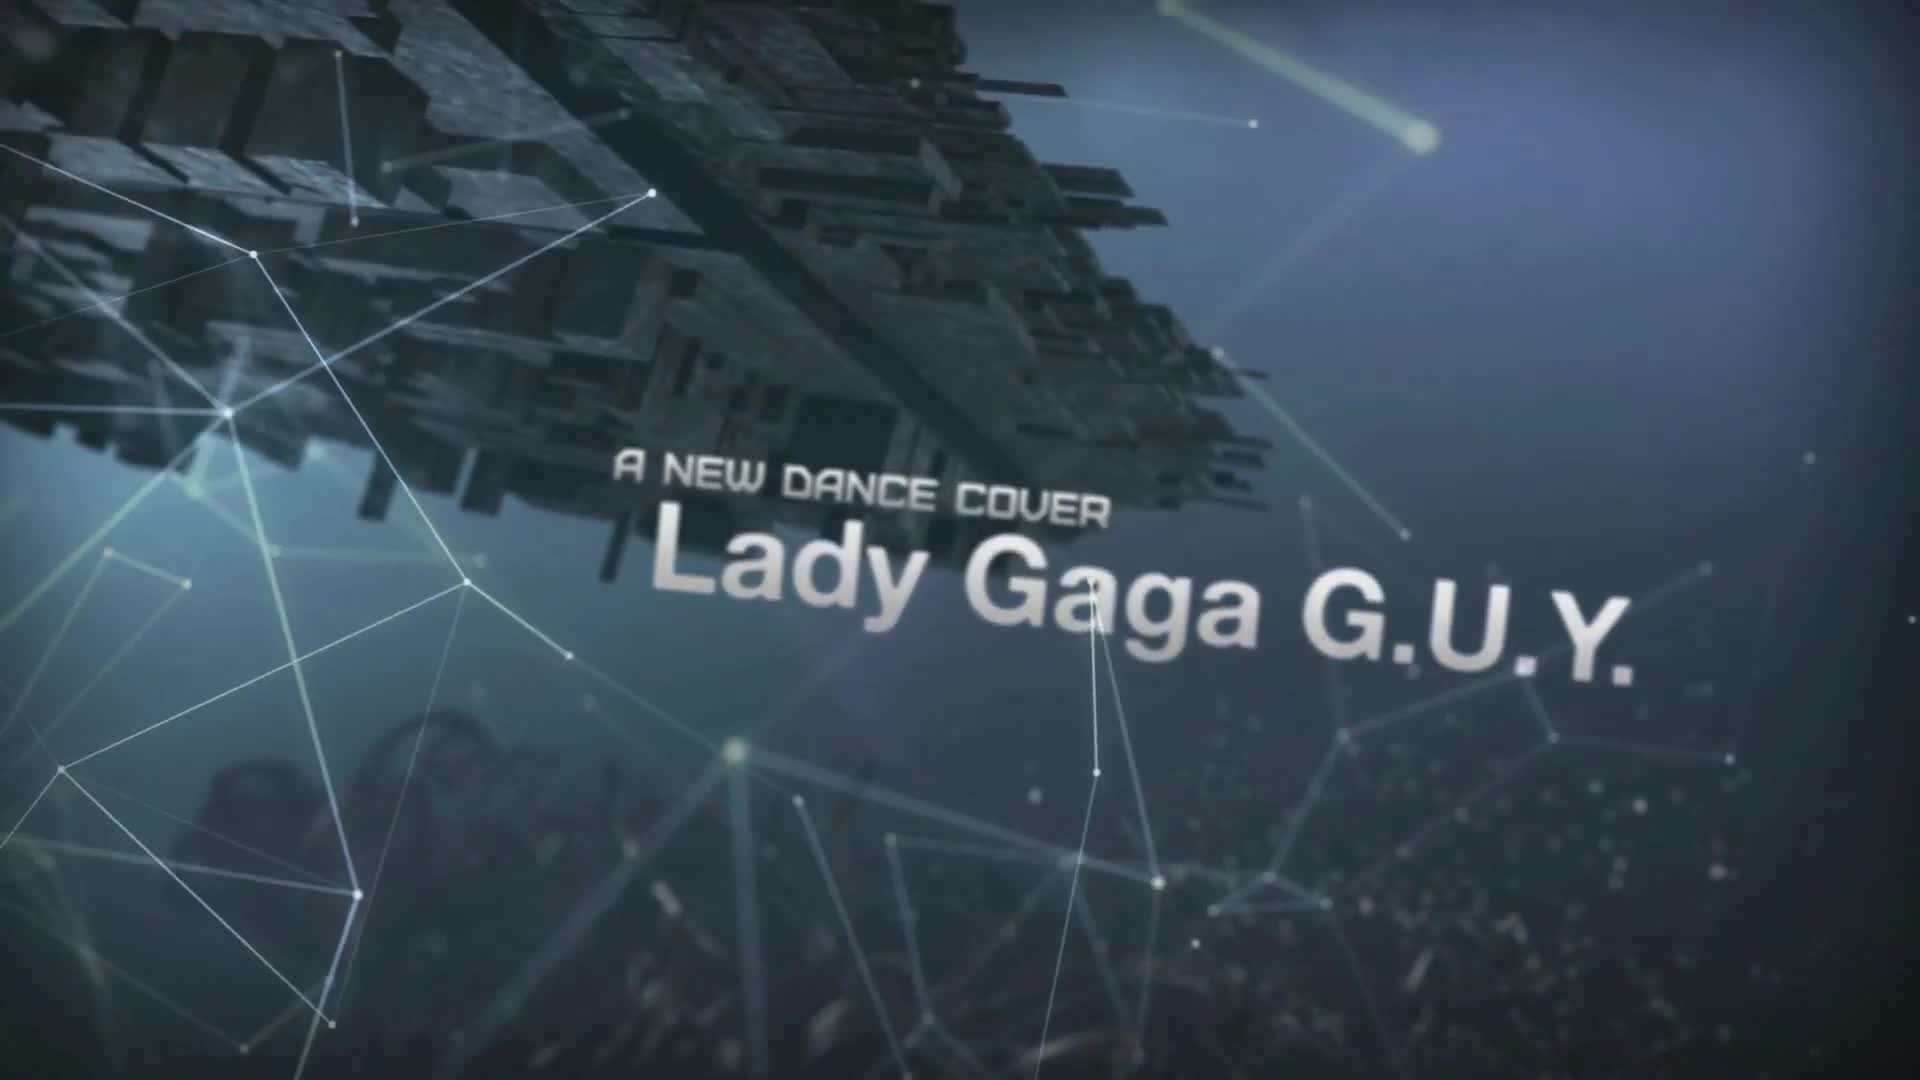 Lady Gaga_G.U.Y. WAVEYA ★ Mobile ver cover dance